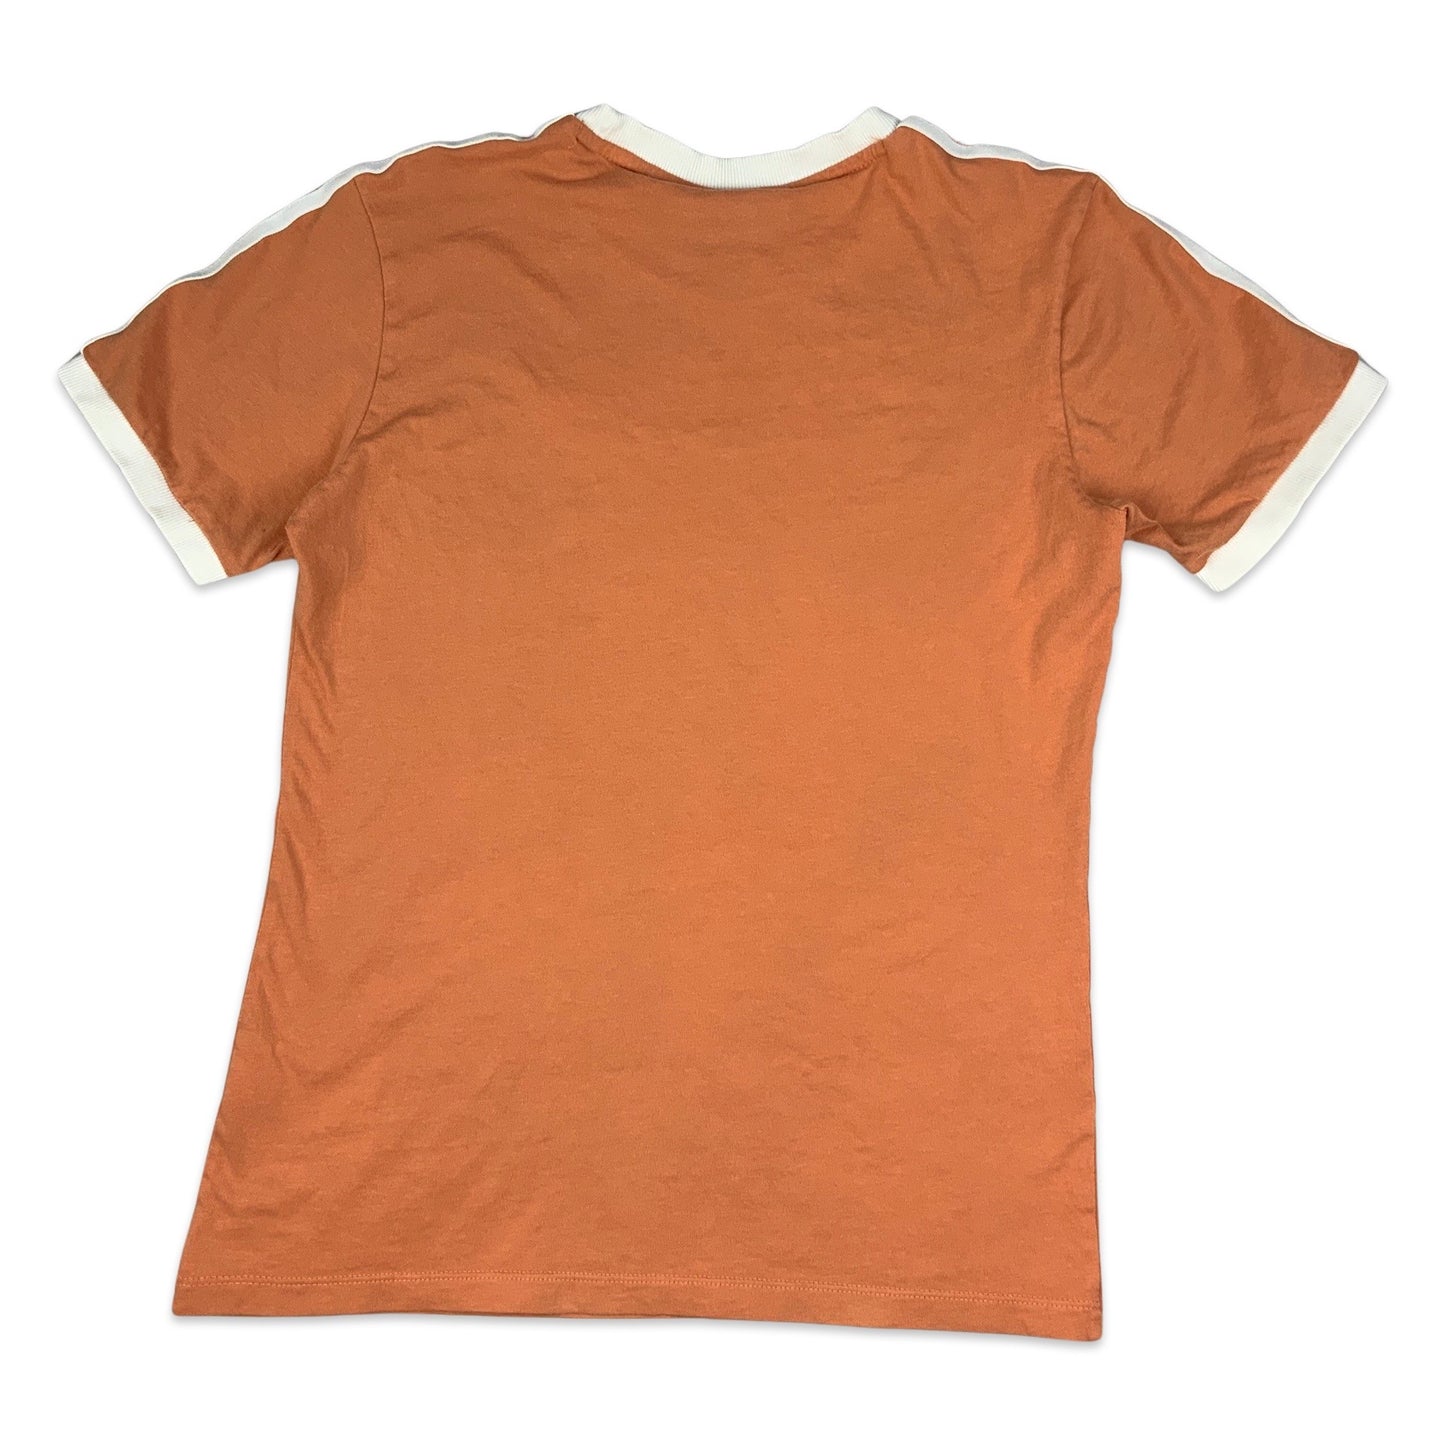 Adidas Orange & White Three Stripe Tee T-Shirt 8 10